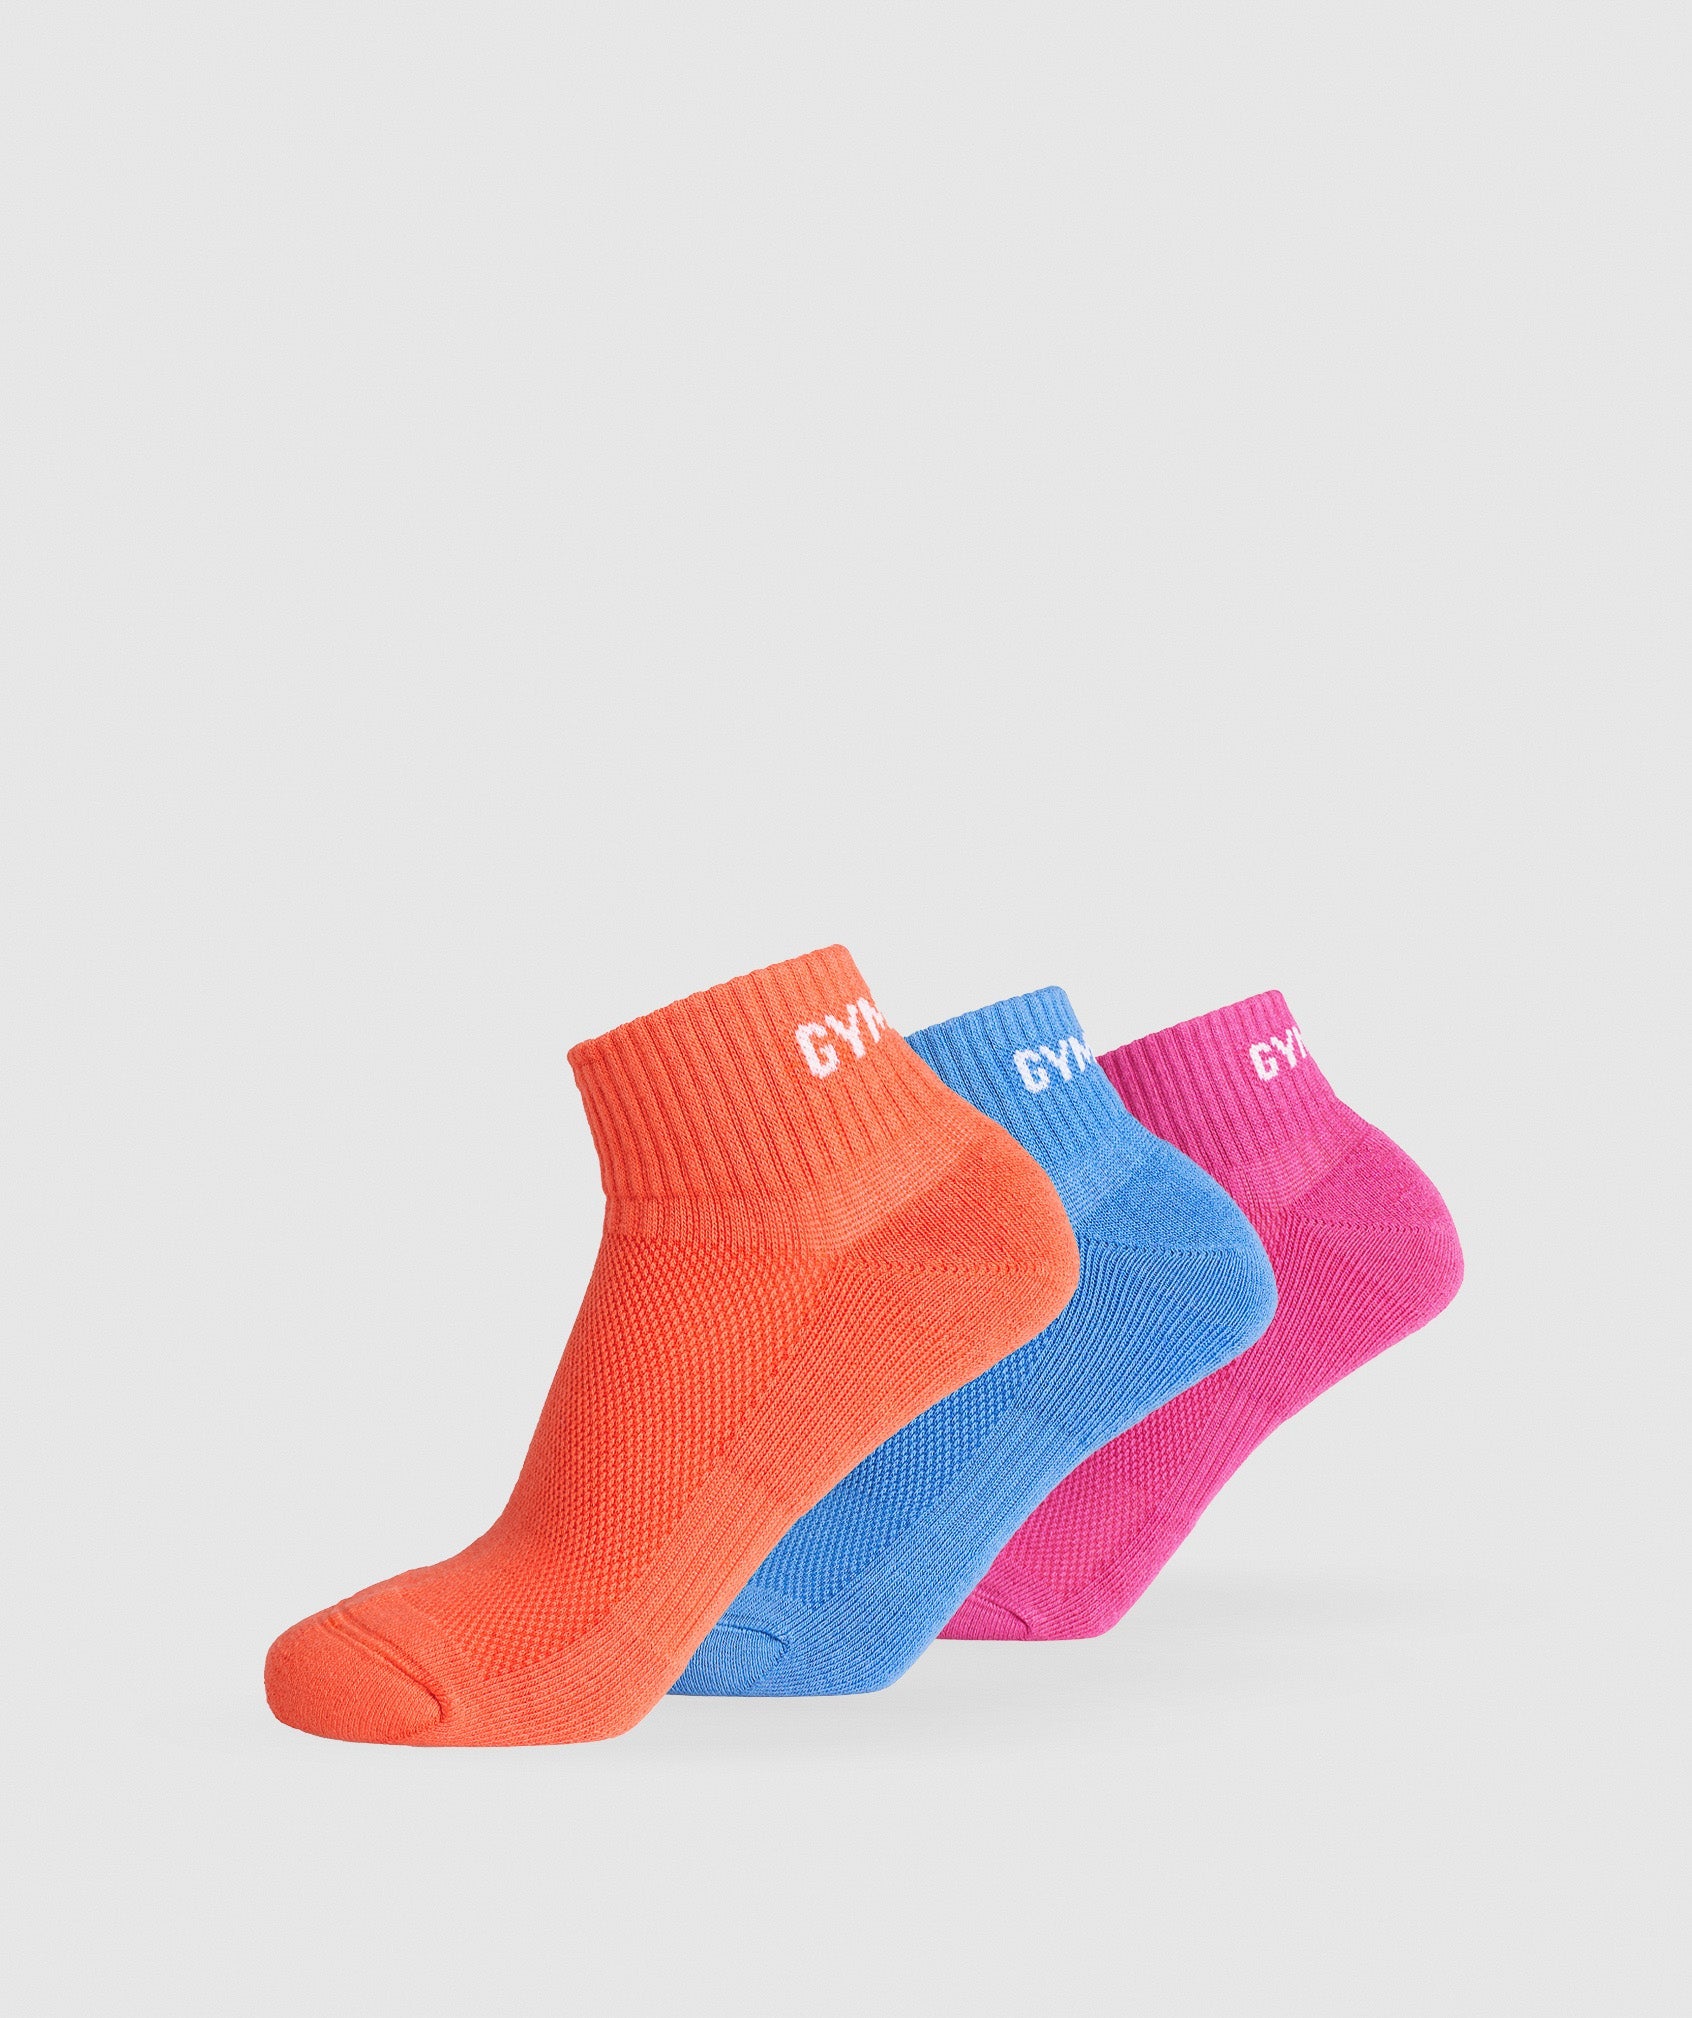 GS Jacquared Quarter Socks 3pk in Wannabe Orange/Lats Blue/Valley Pink